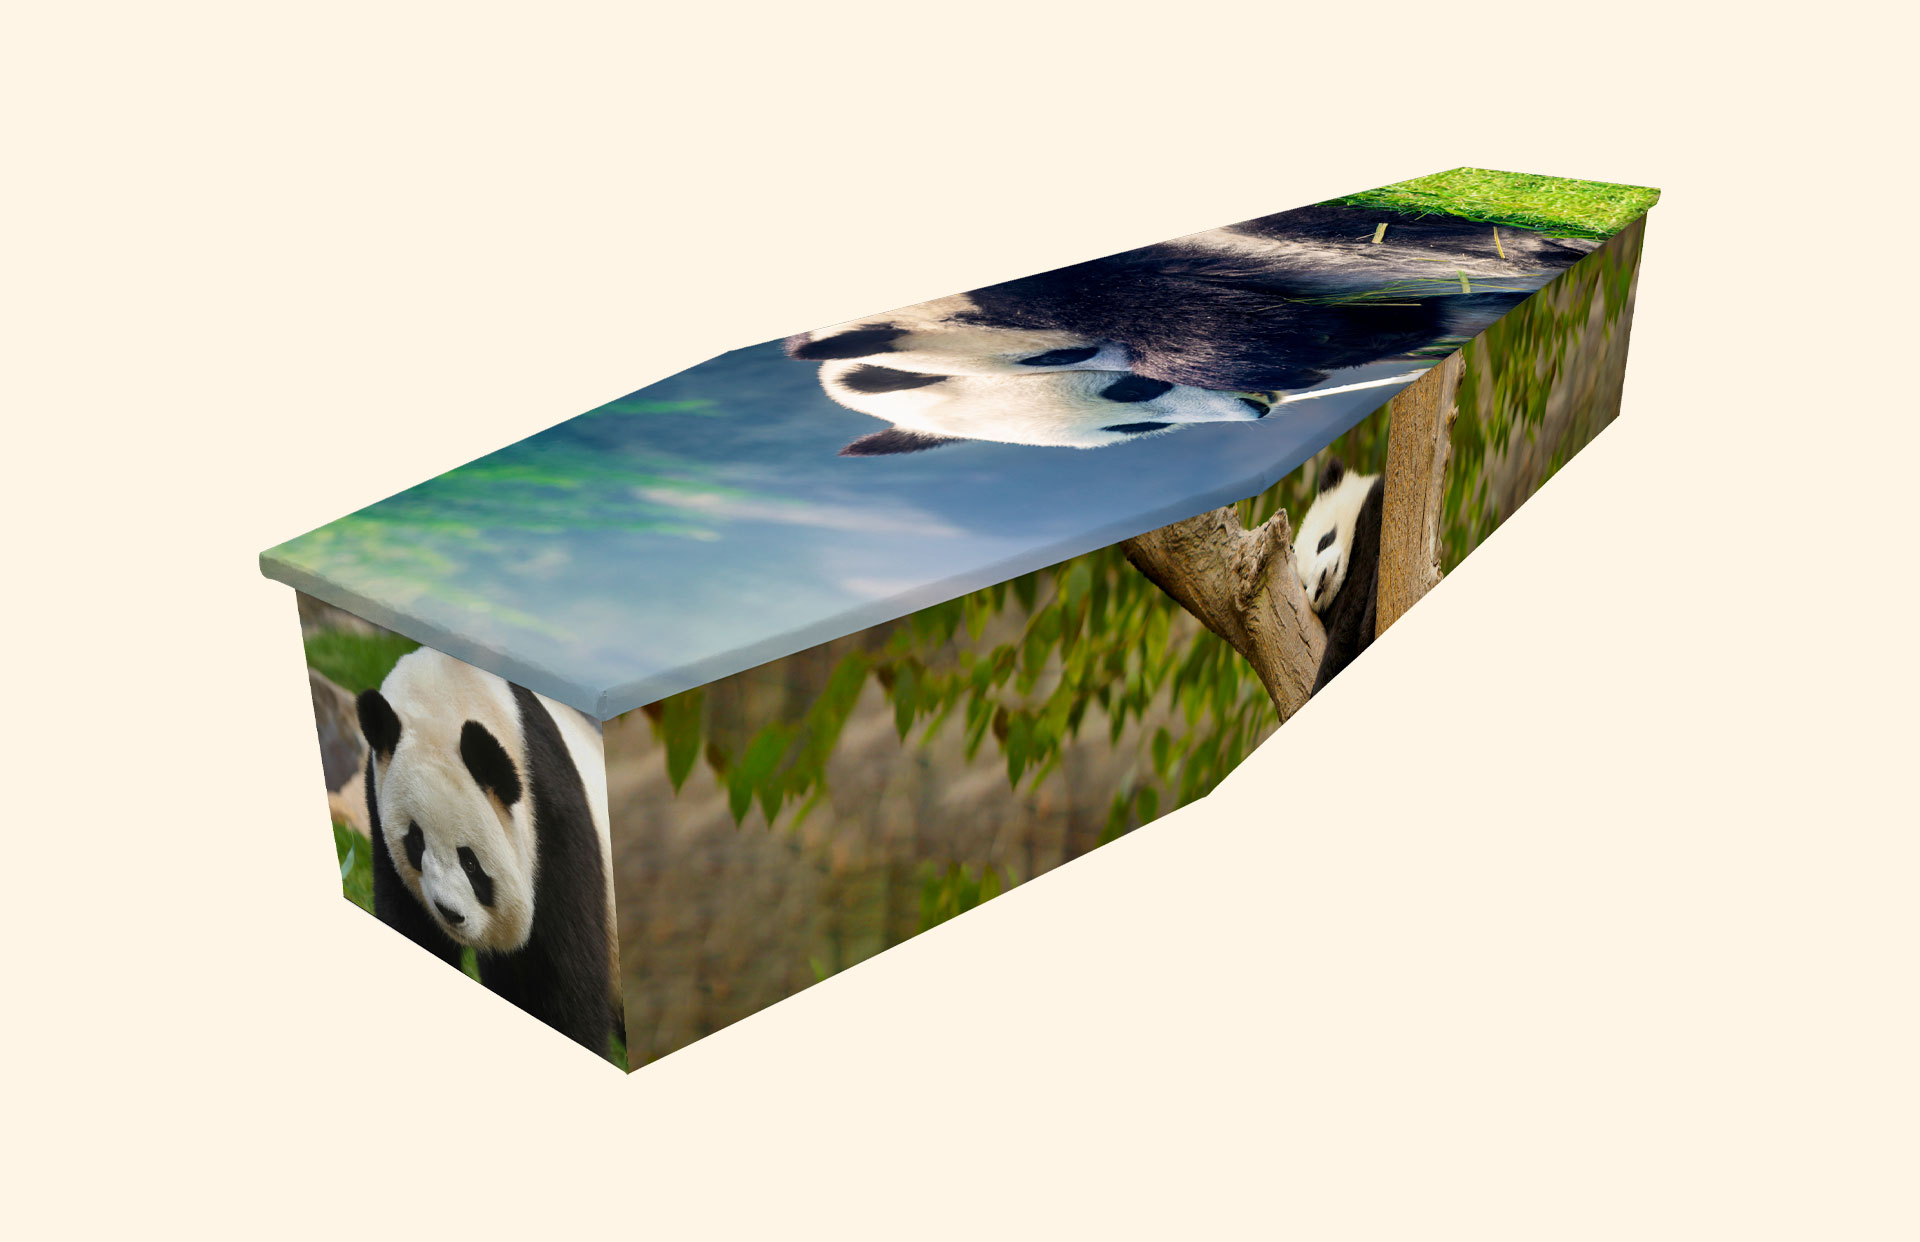 Panda Love design on a cardboard coffin